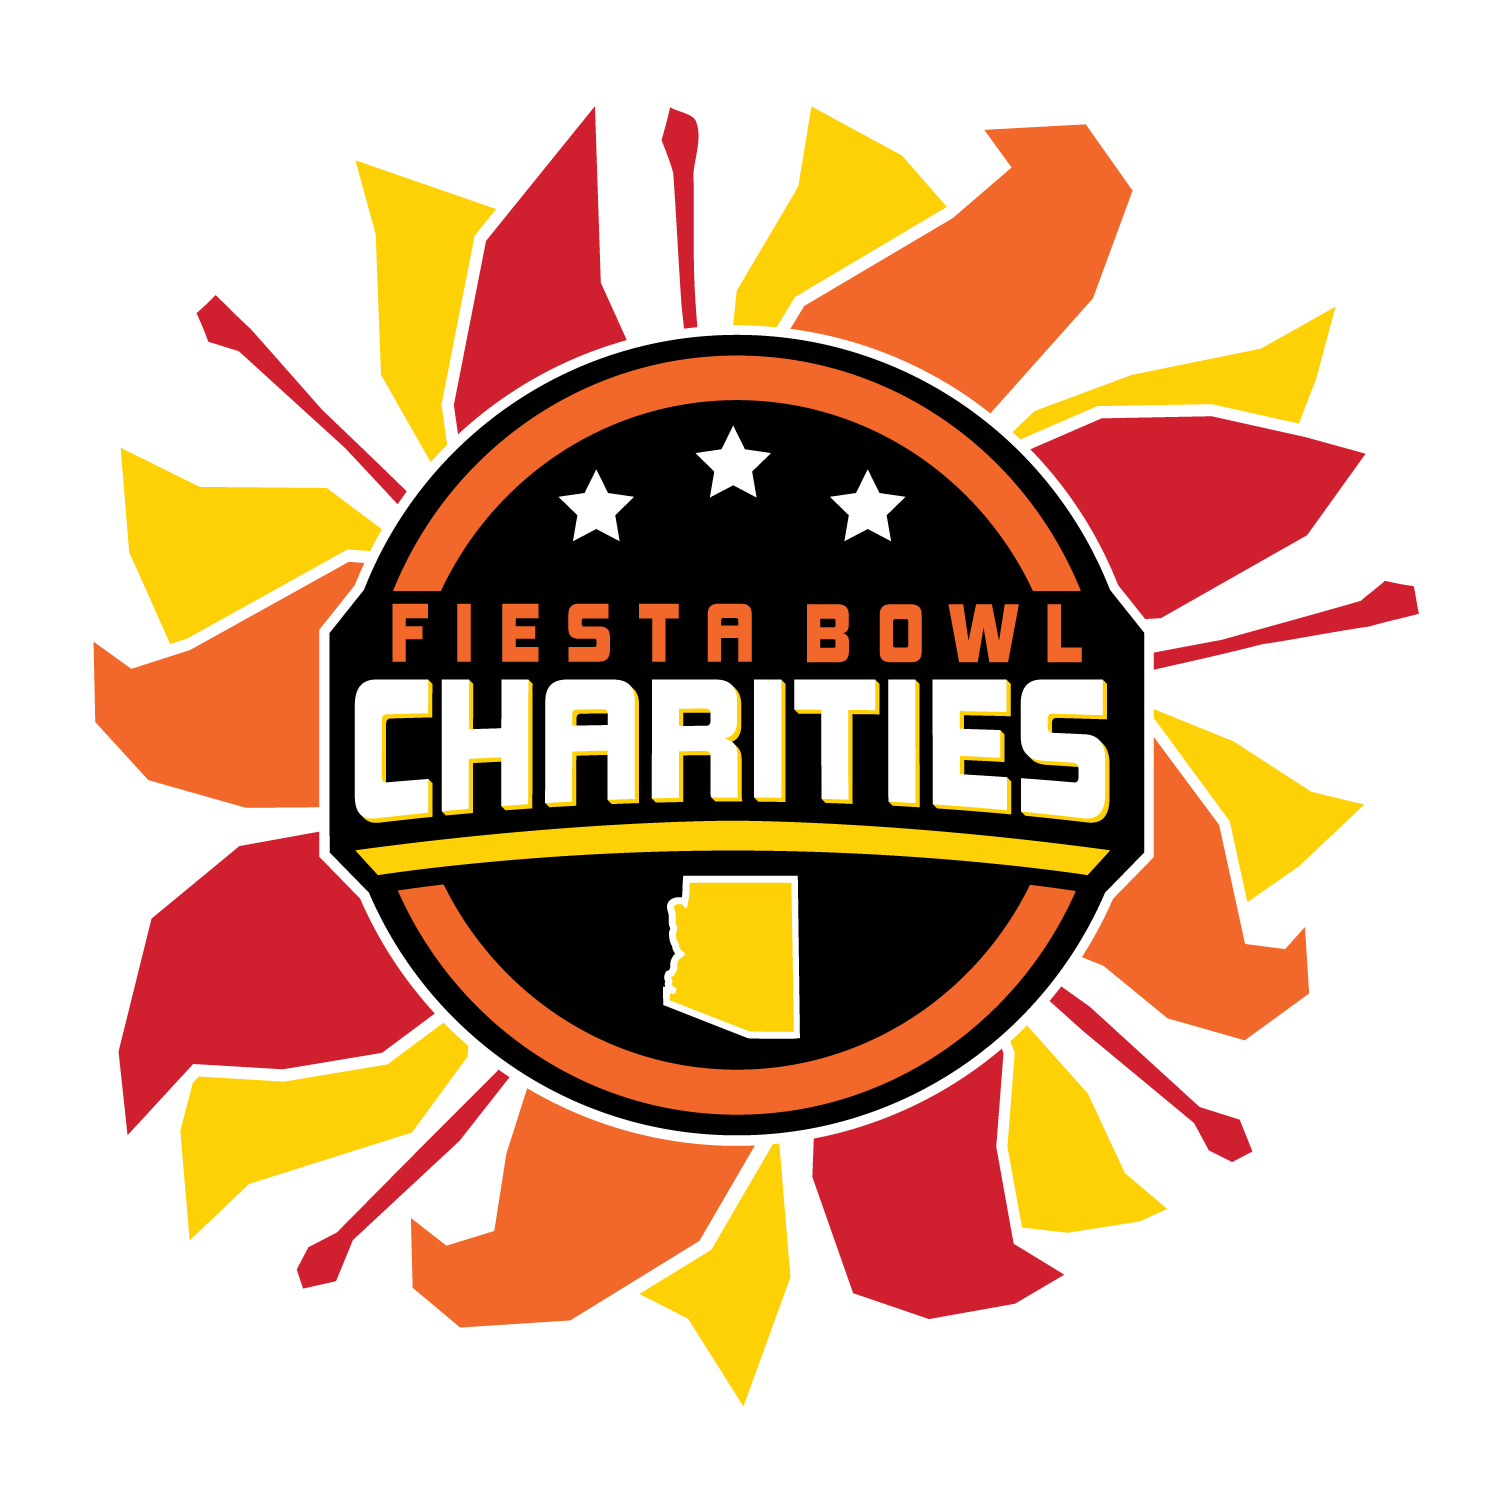 Fiesta Bowl Charities (Copy)